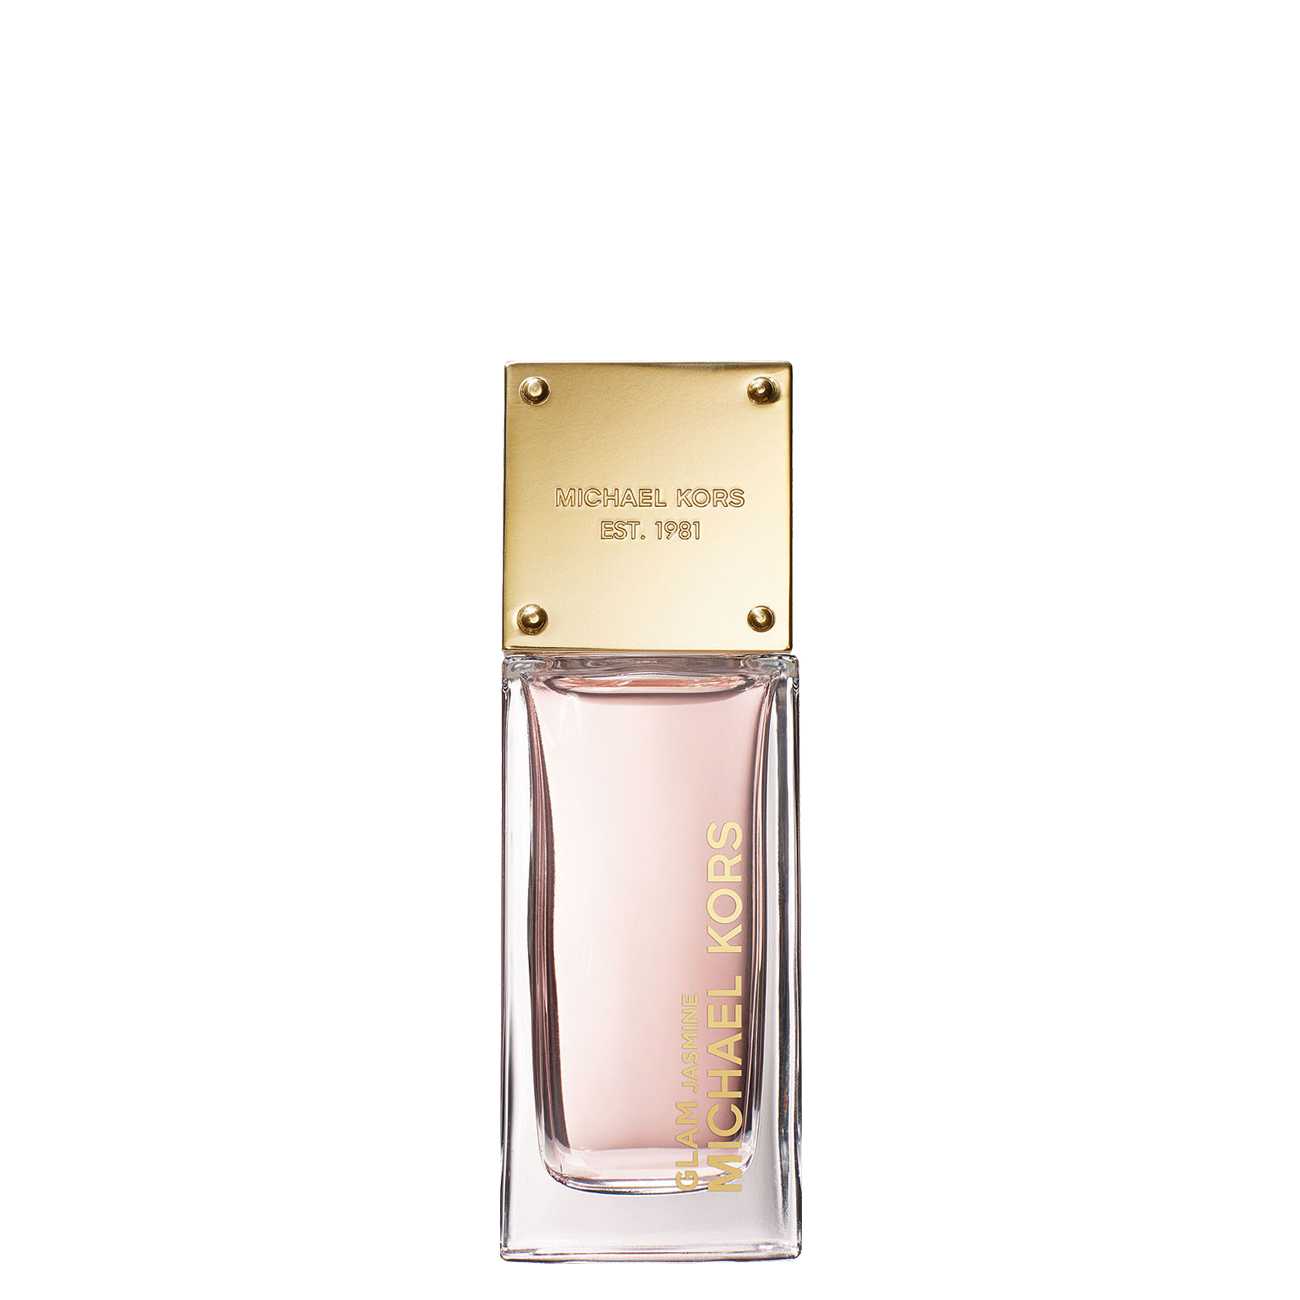 Apa de Parfum Michael Kors GLAM JASMINE 50ml cu comanda online